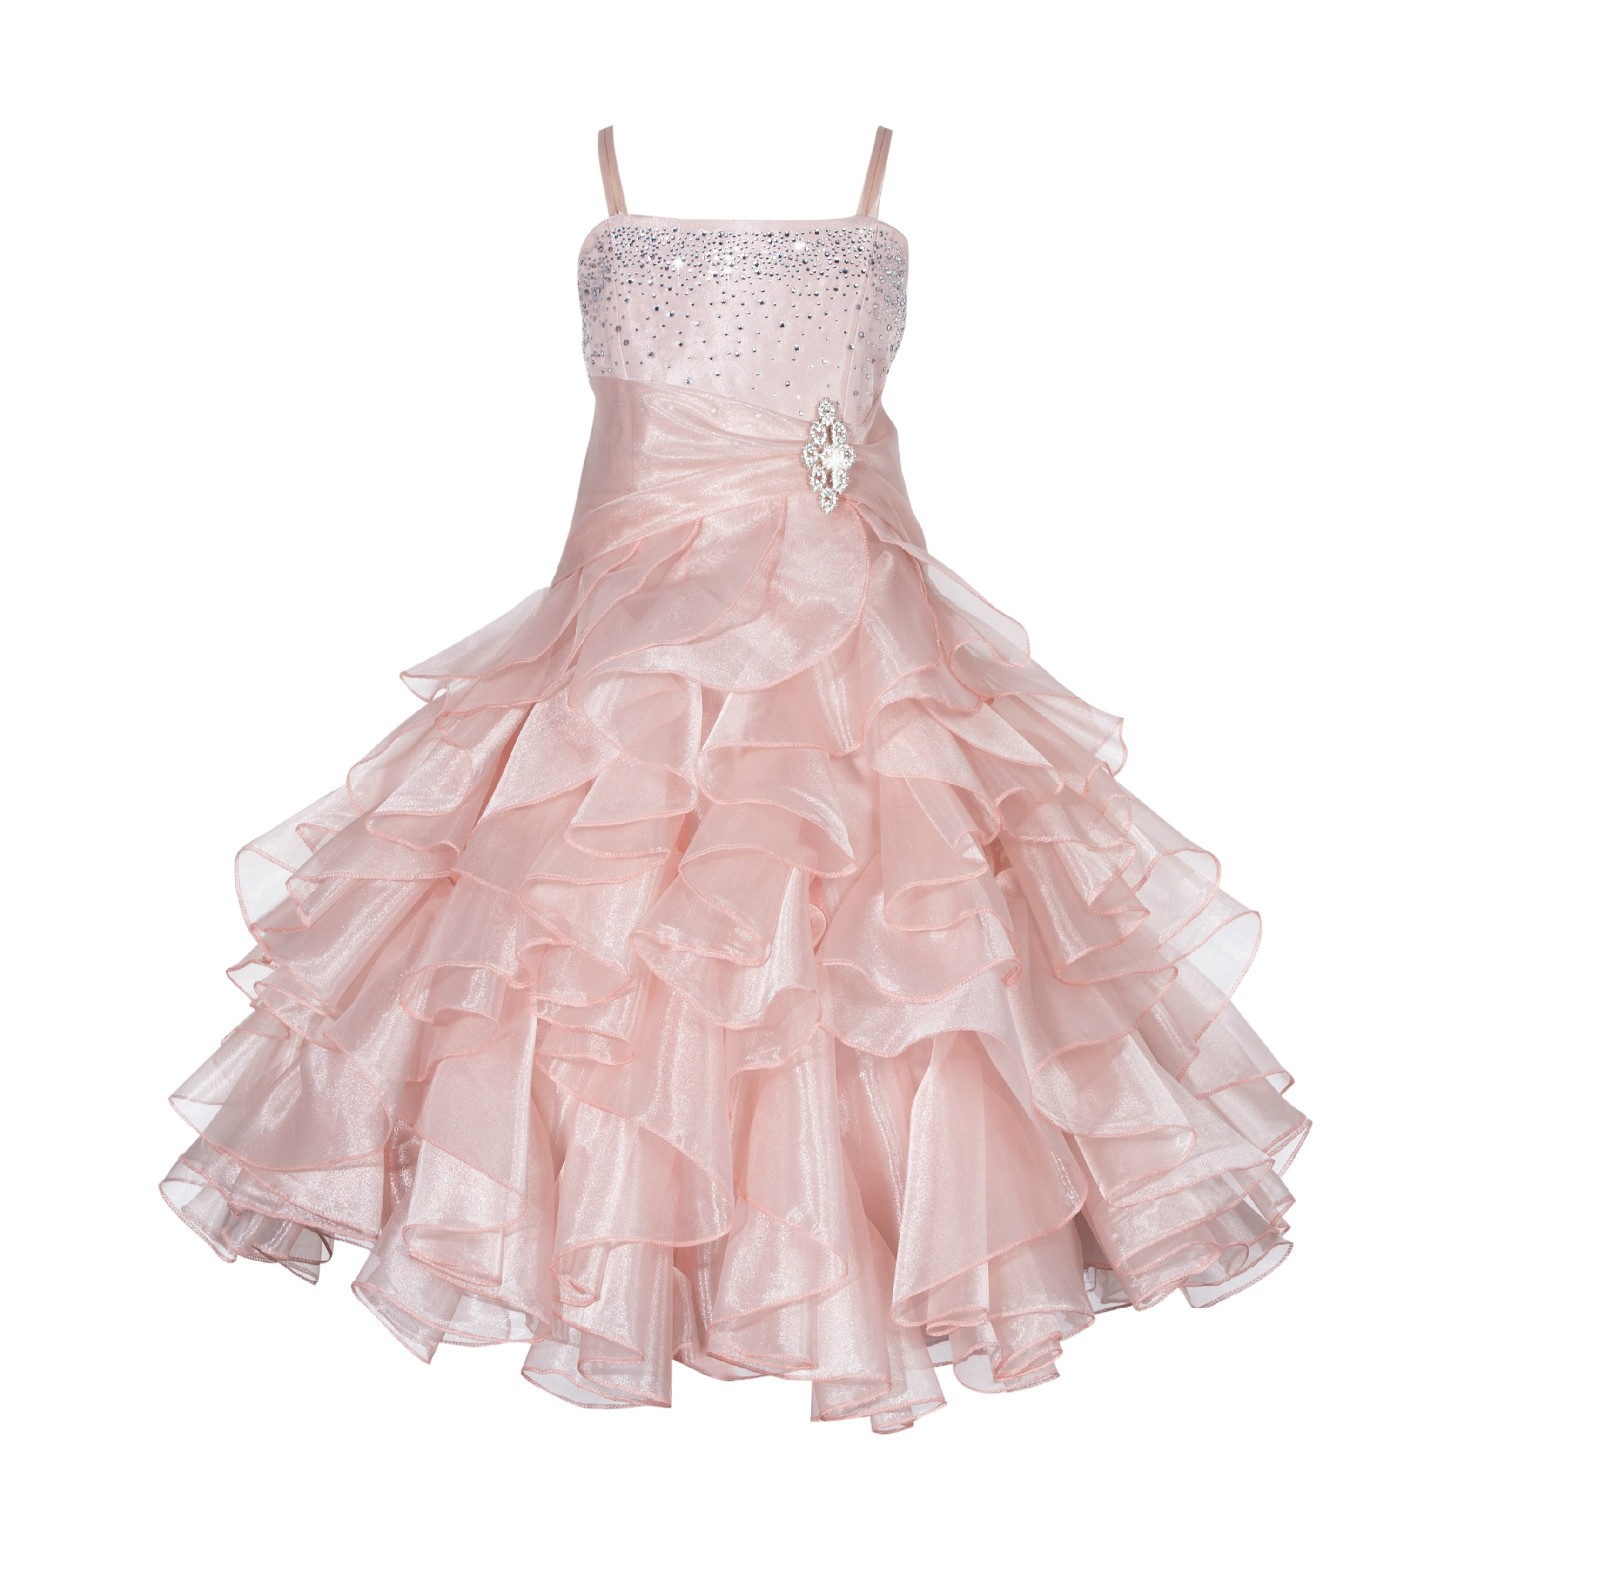 ekidsbridal Elegant Stunning Rhinestone Organza Pleated Ruffled Flower Girl Dress Toddler Girl Dresses Special Events Princess Dresses 164S